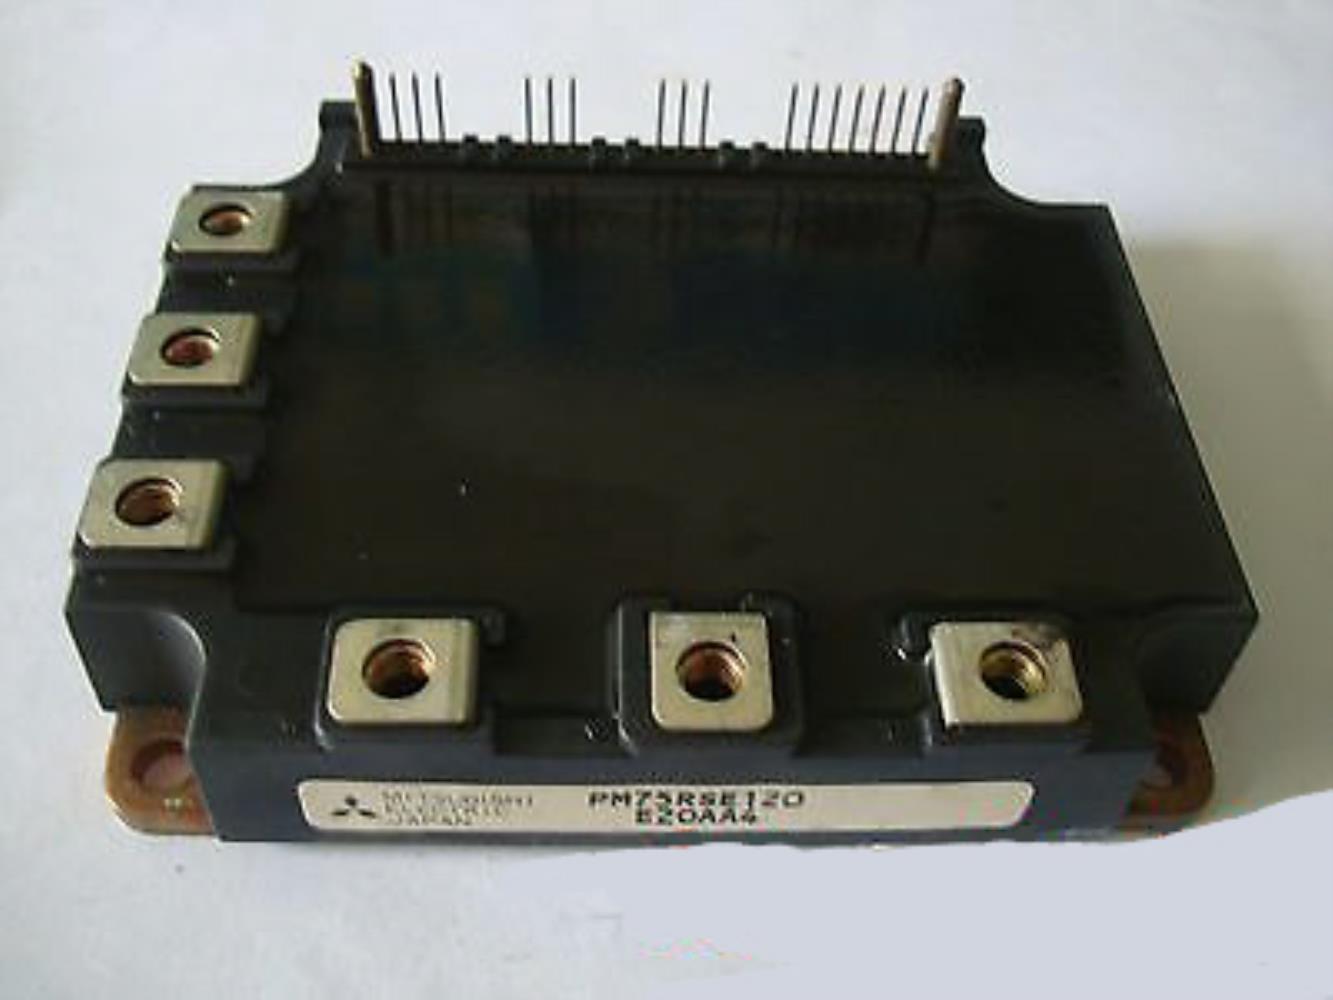 PM75RSE120 - PM75RSE120 75A 1200V IPM Güç Modül